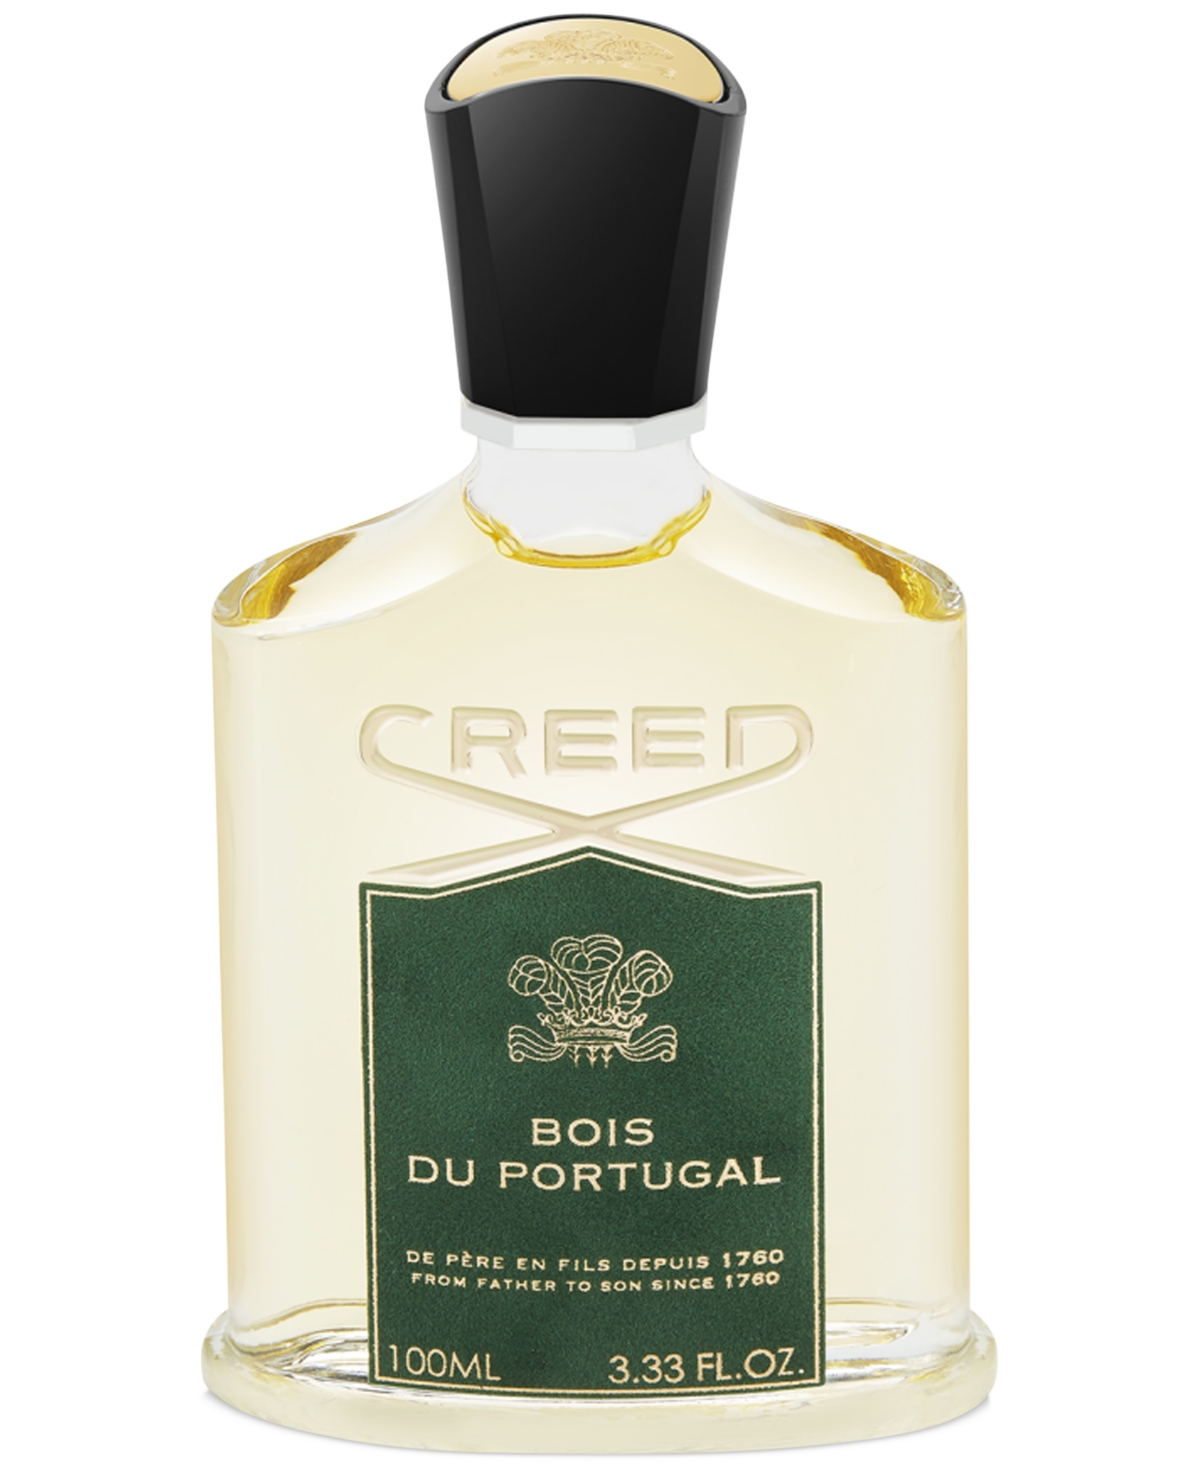 Creed Bois Du Portugal, 3.33 Oz.